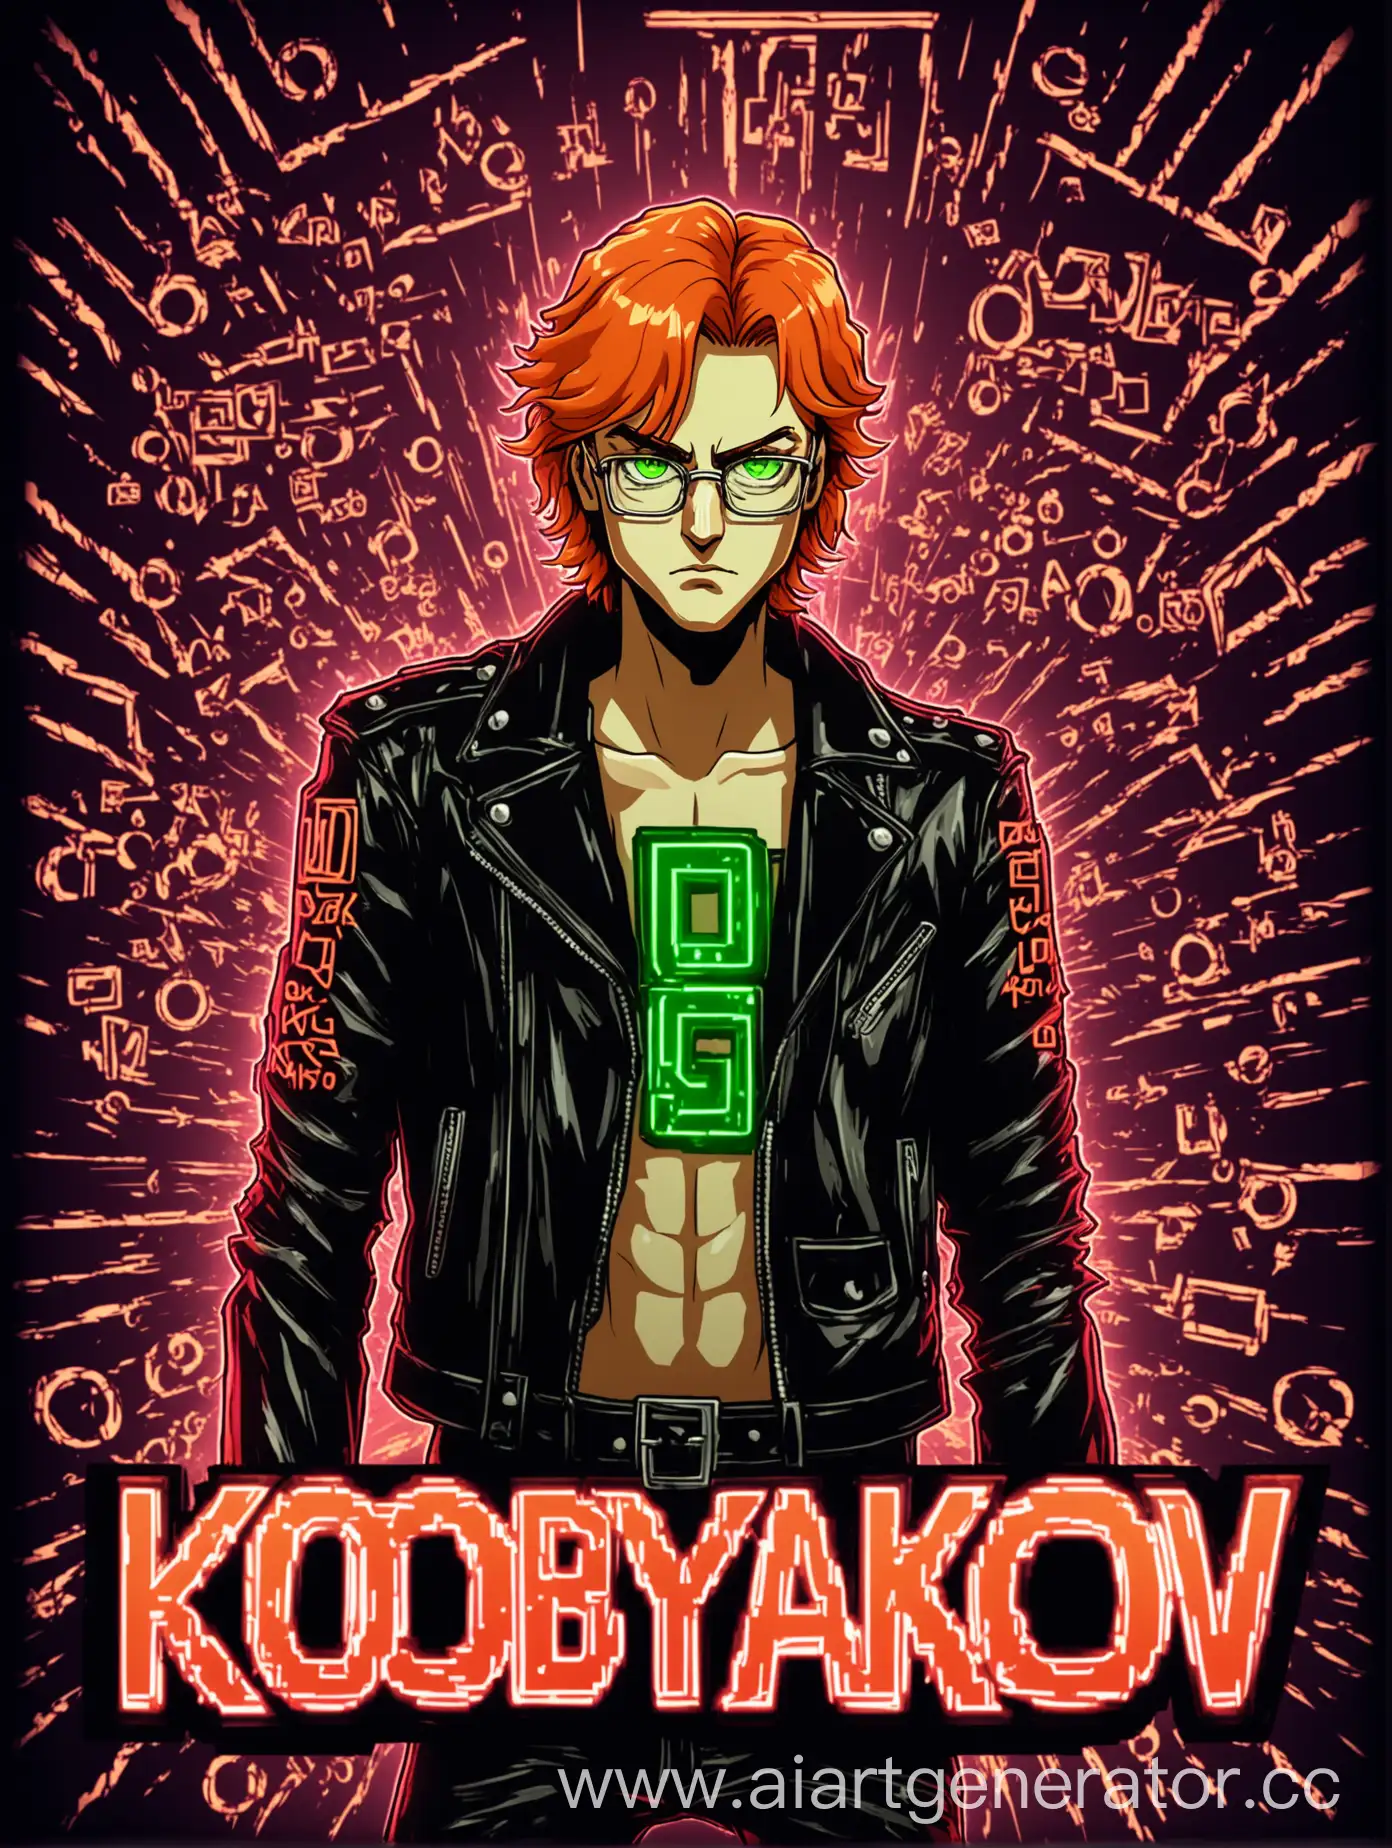 Kobyakov-a-Stylish-Man-with-Orange-Hair-and-Green-Eyes-in-Minsk-A-JoJo-Style-Portrait